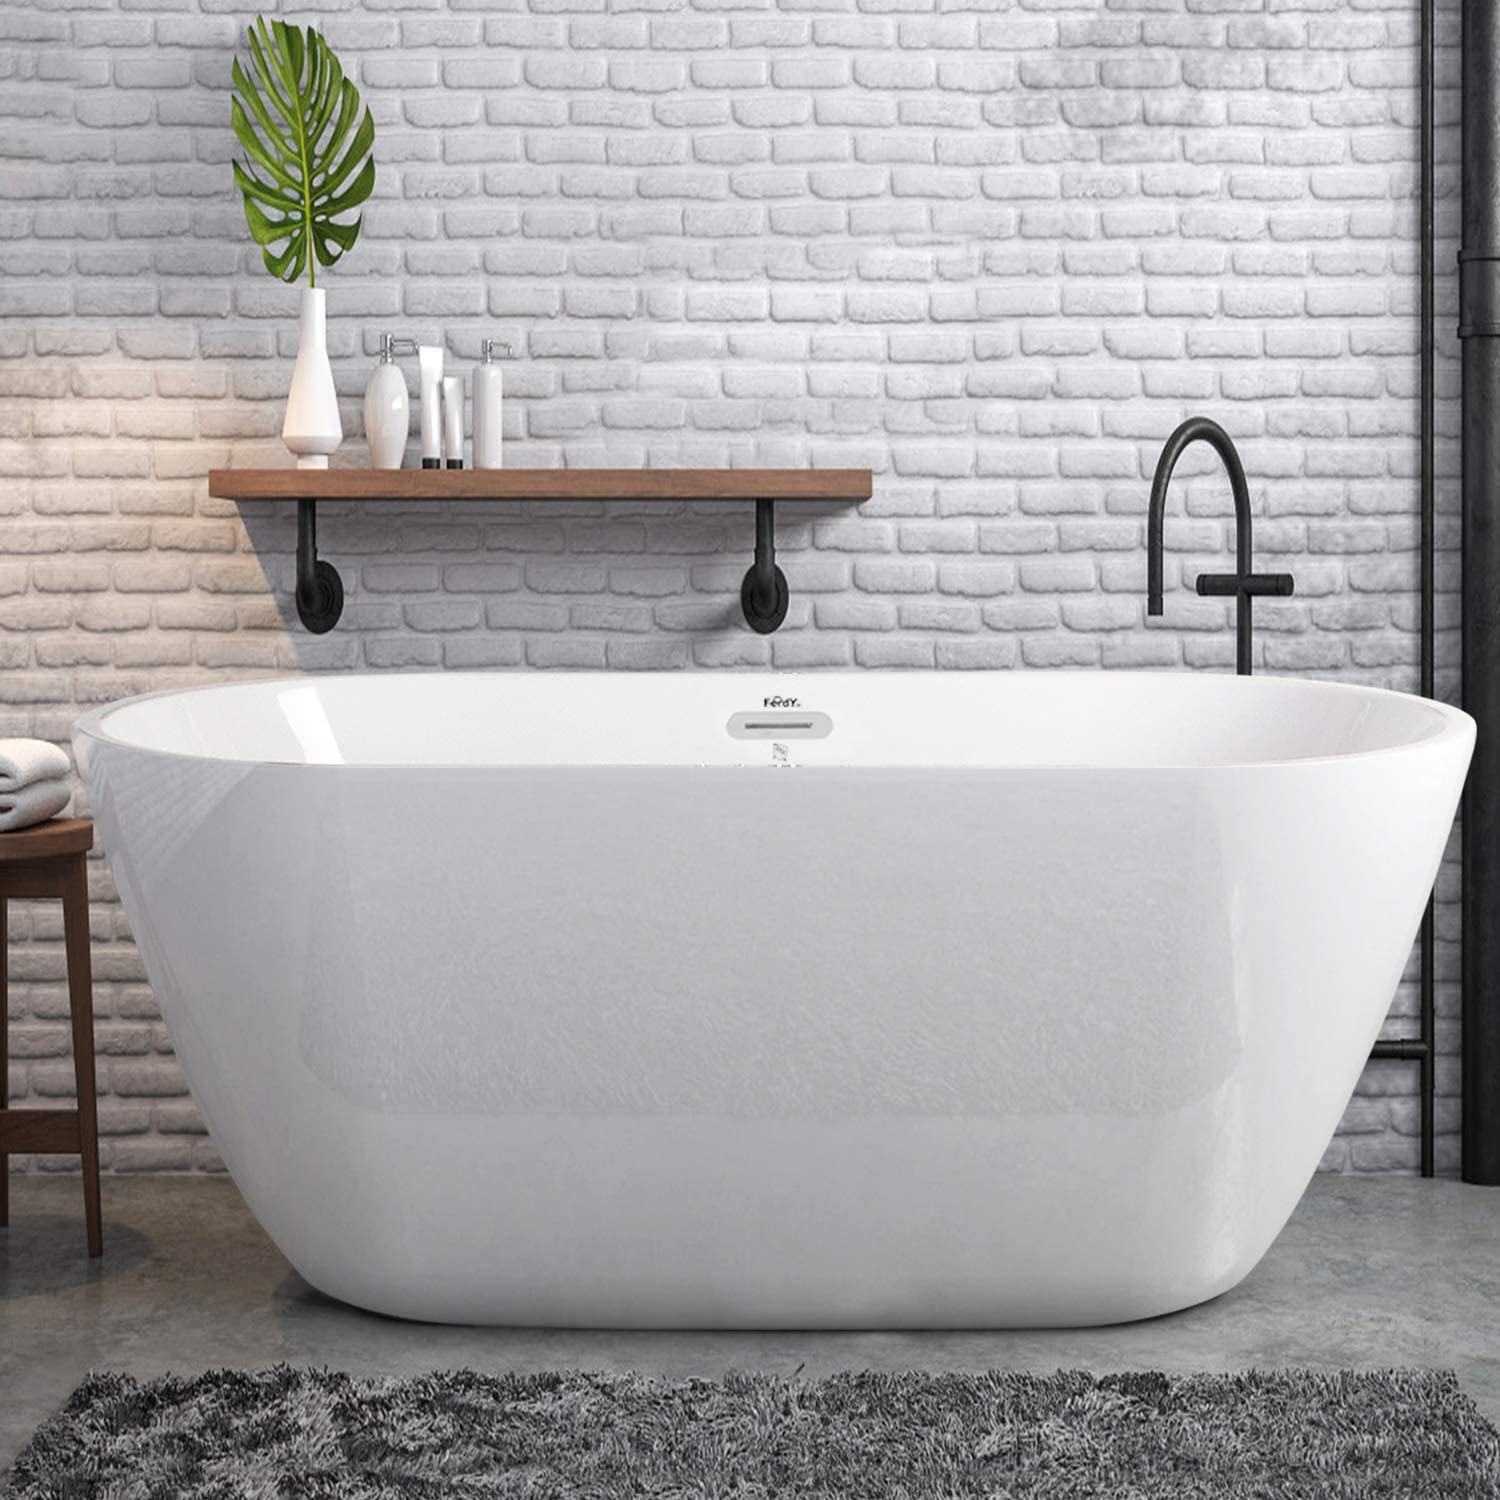 Freestanding Bathtub Best +60 Ideas to Enhance Your Bathroom’s Luxuriousness - 8